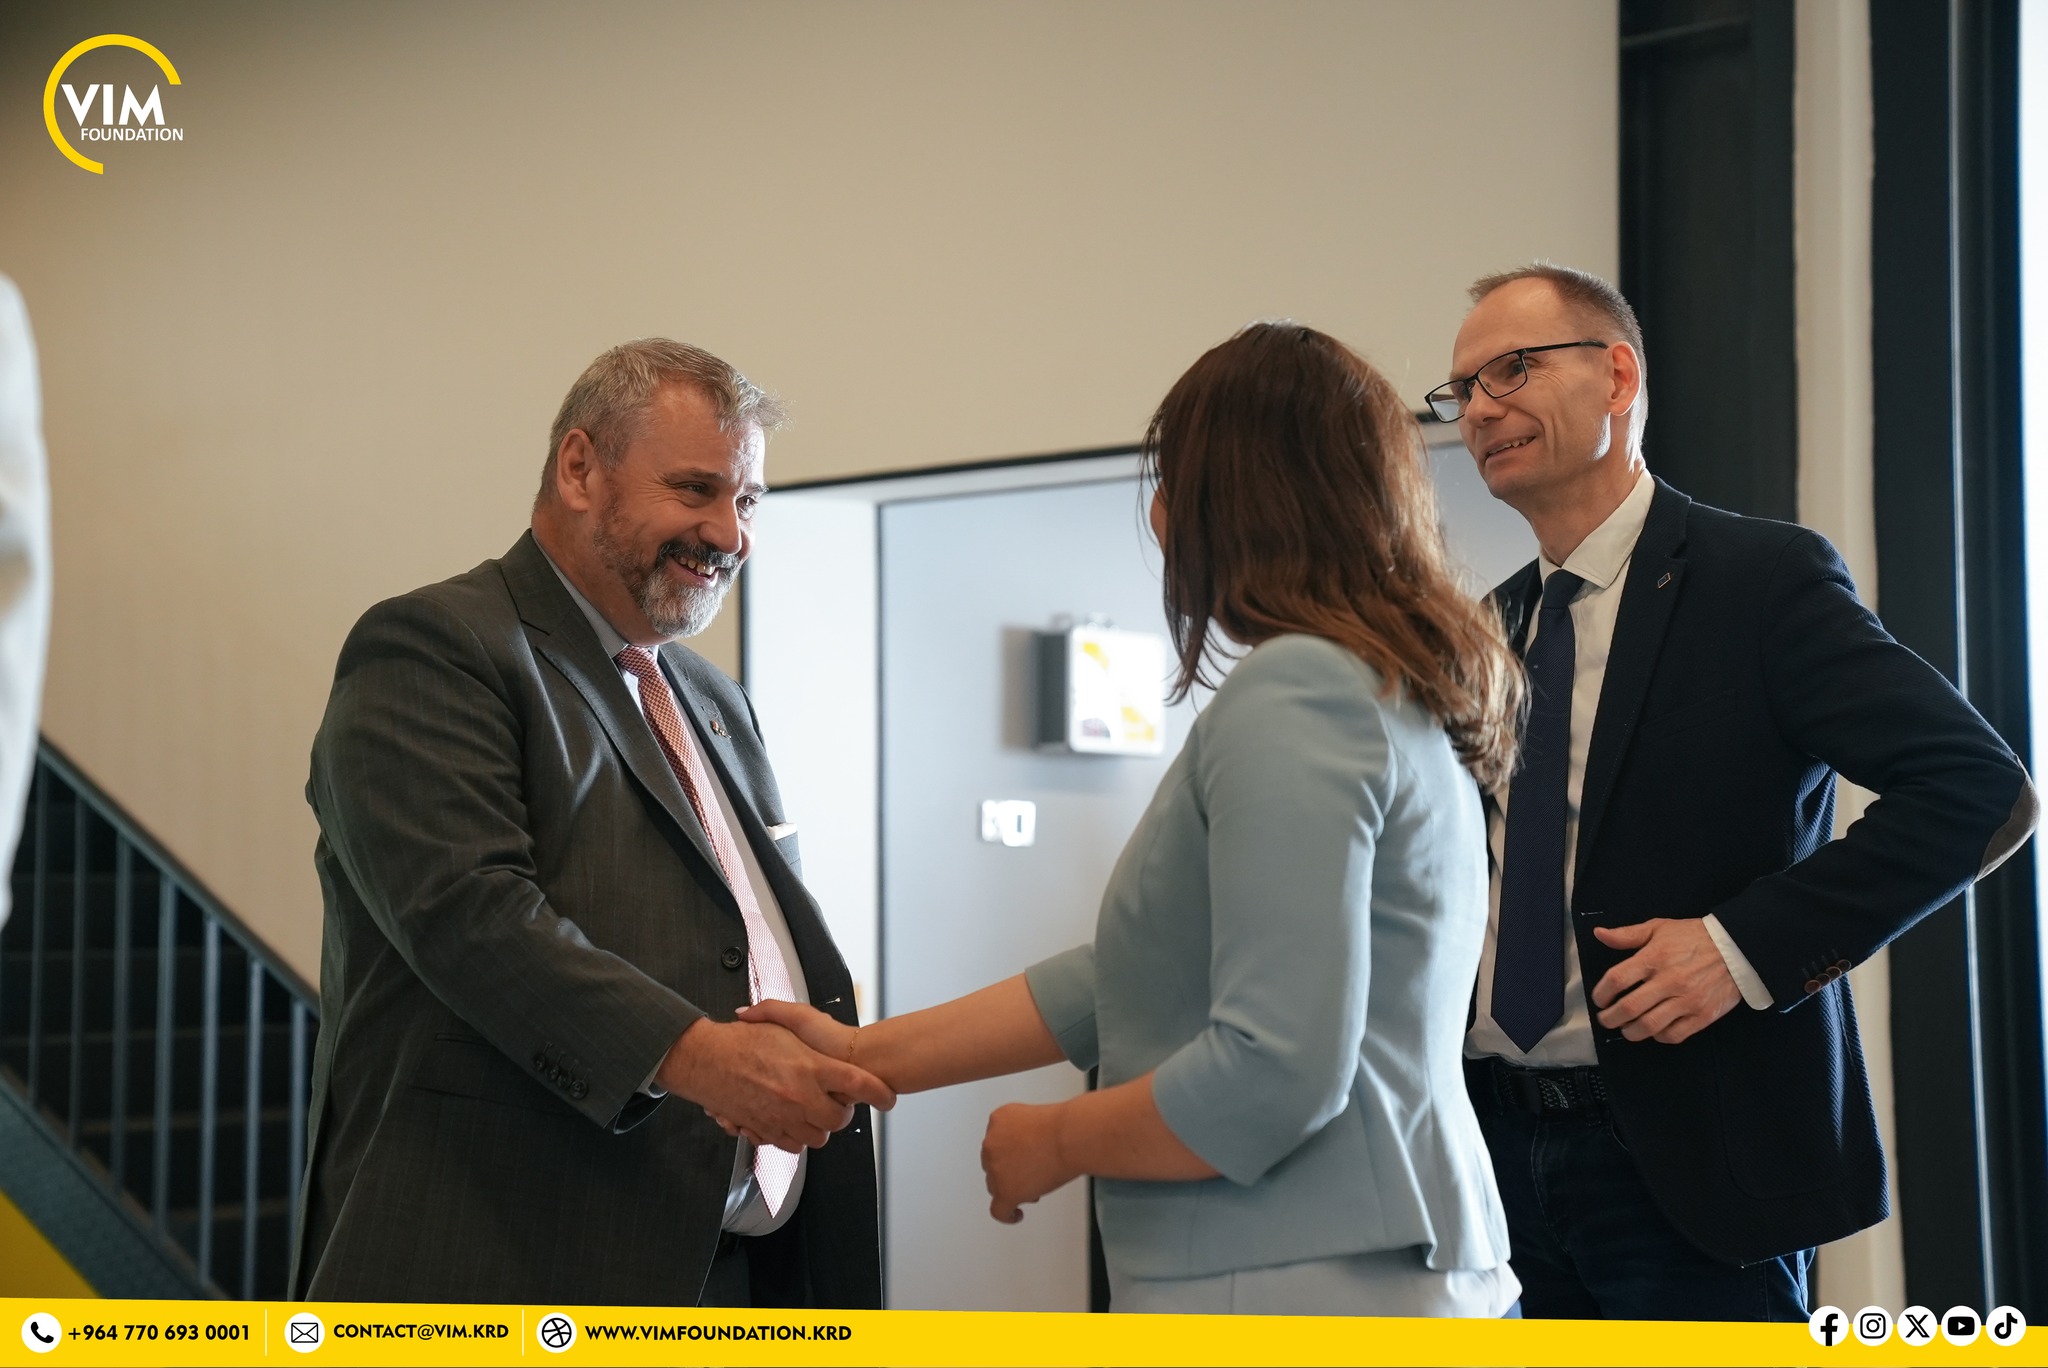 Mr. Thomas Seiler, the EU Ambassador in Iraq, paid a visit to Vim Foundation